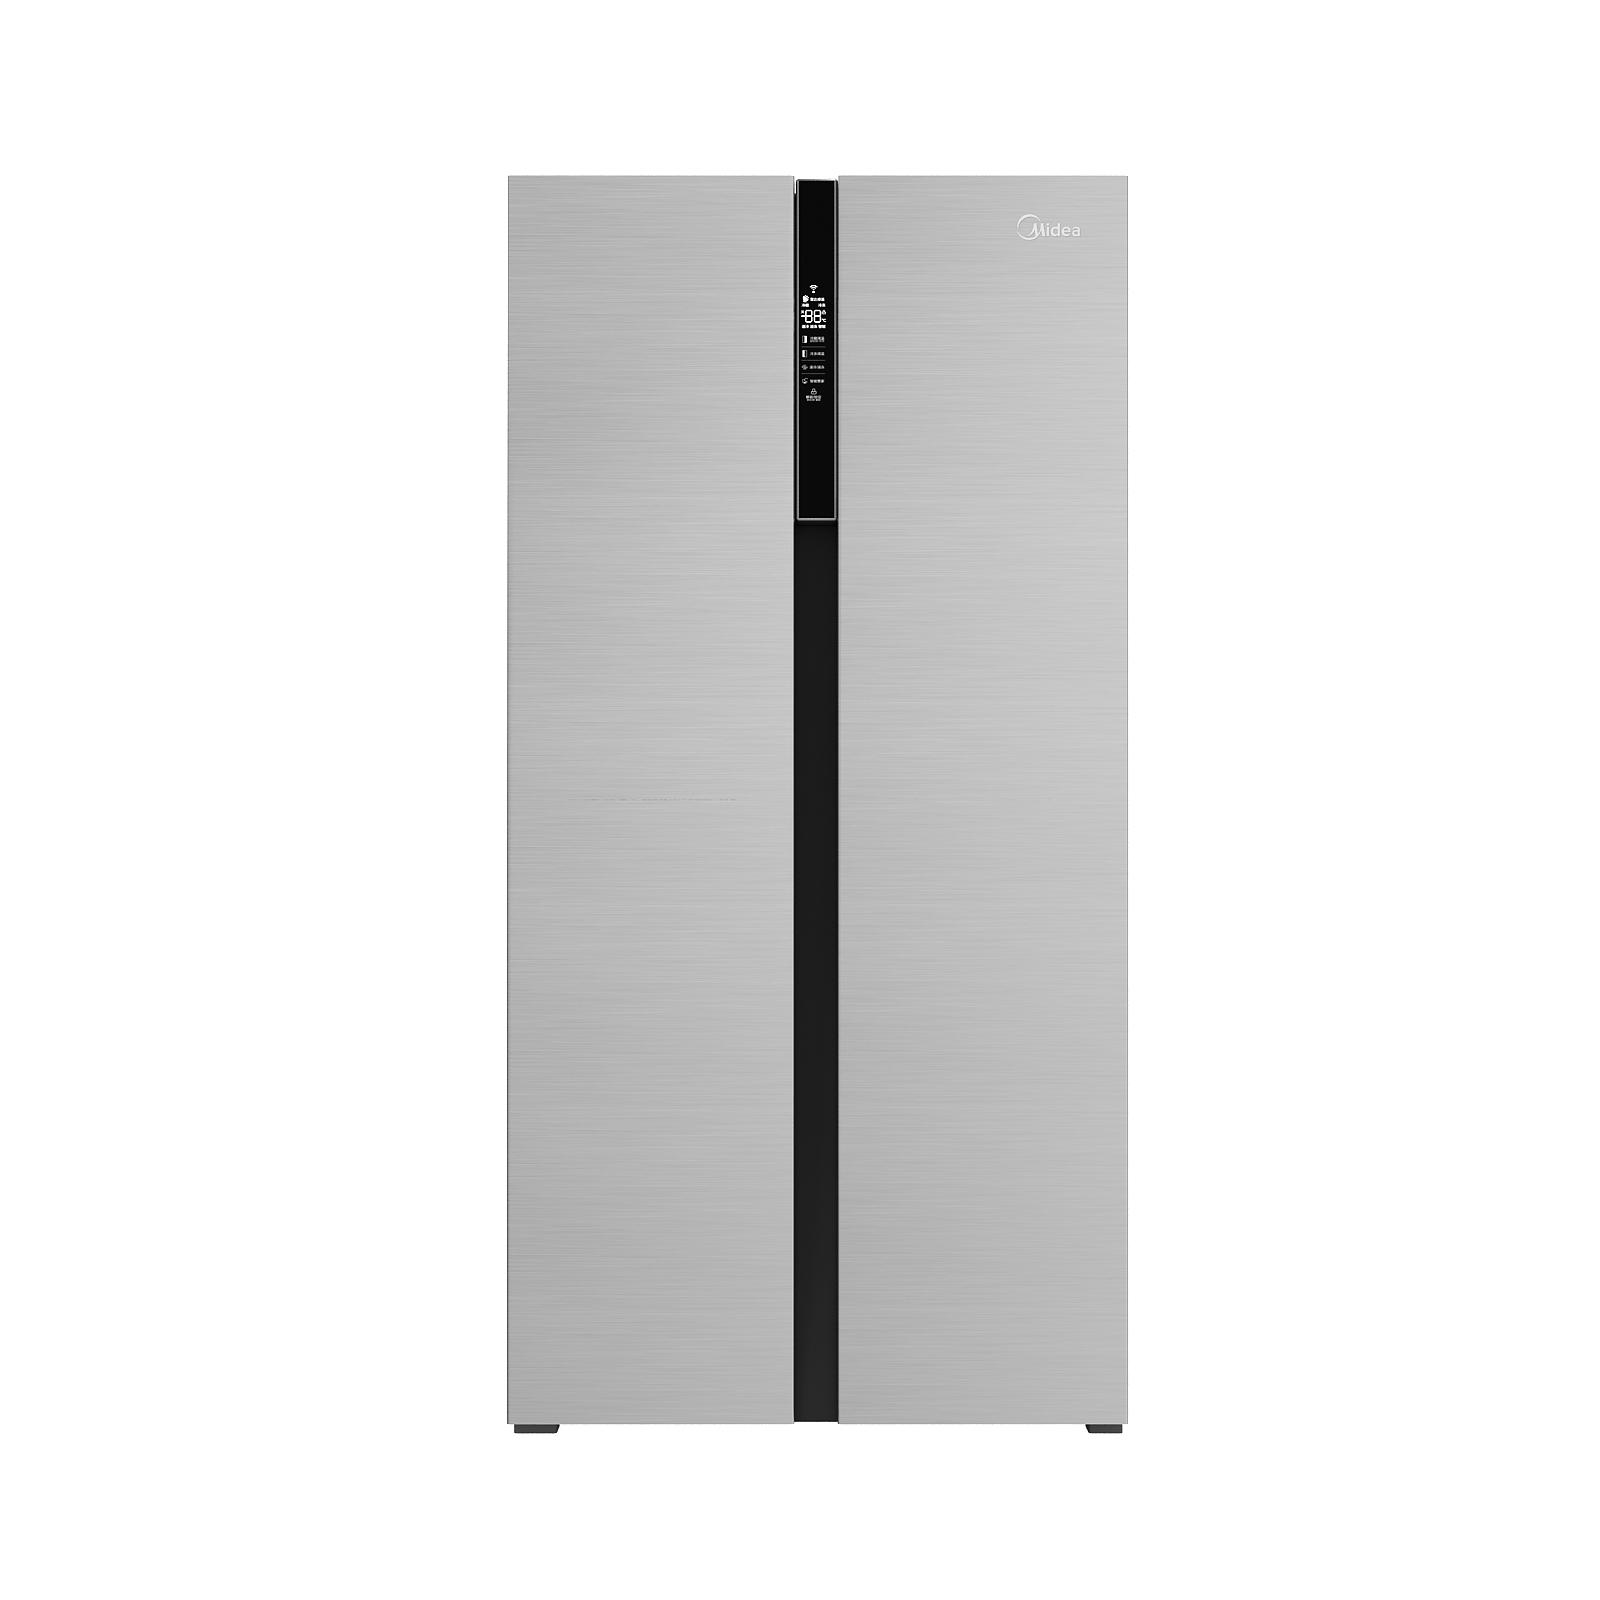 Midea 美的 BCD-520WKM(E) 风冷对开门冰箱 520L